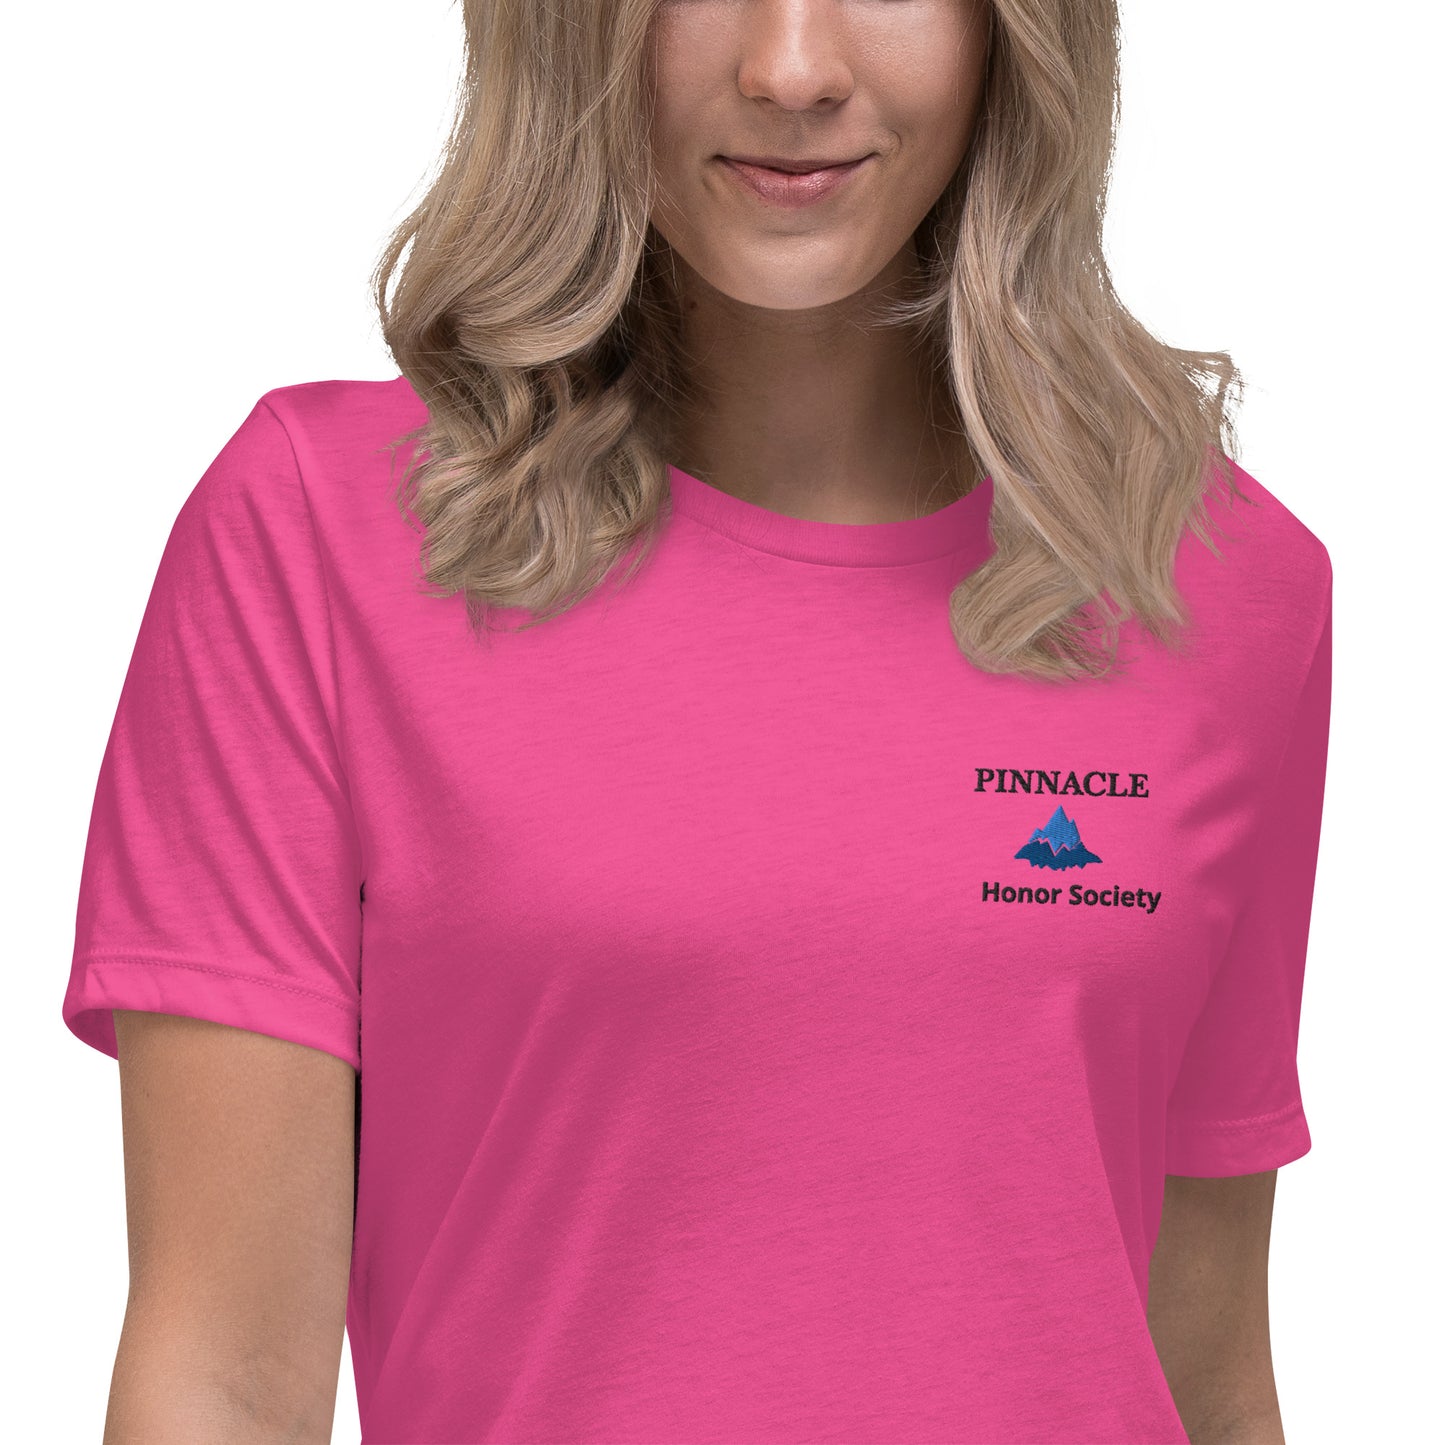 Pinnacle Honor Society Women's Relaxed T-Shirt